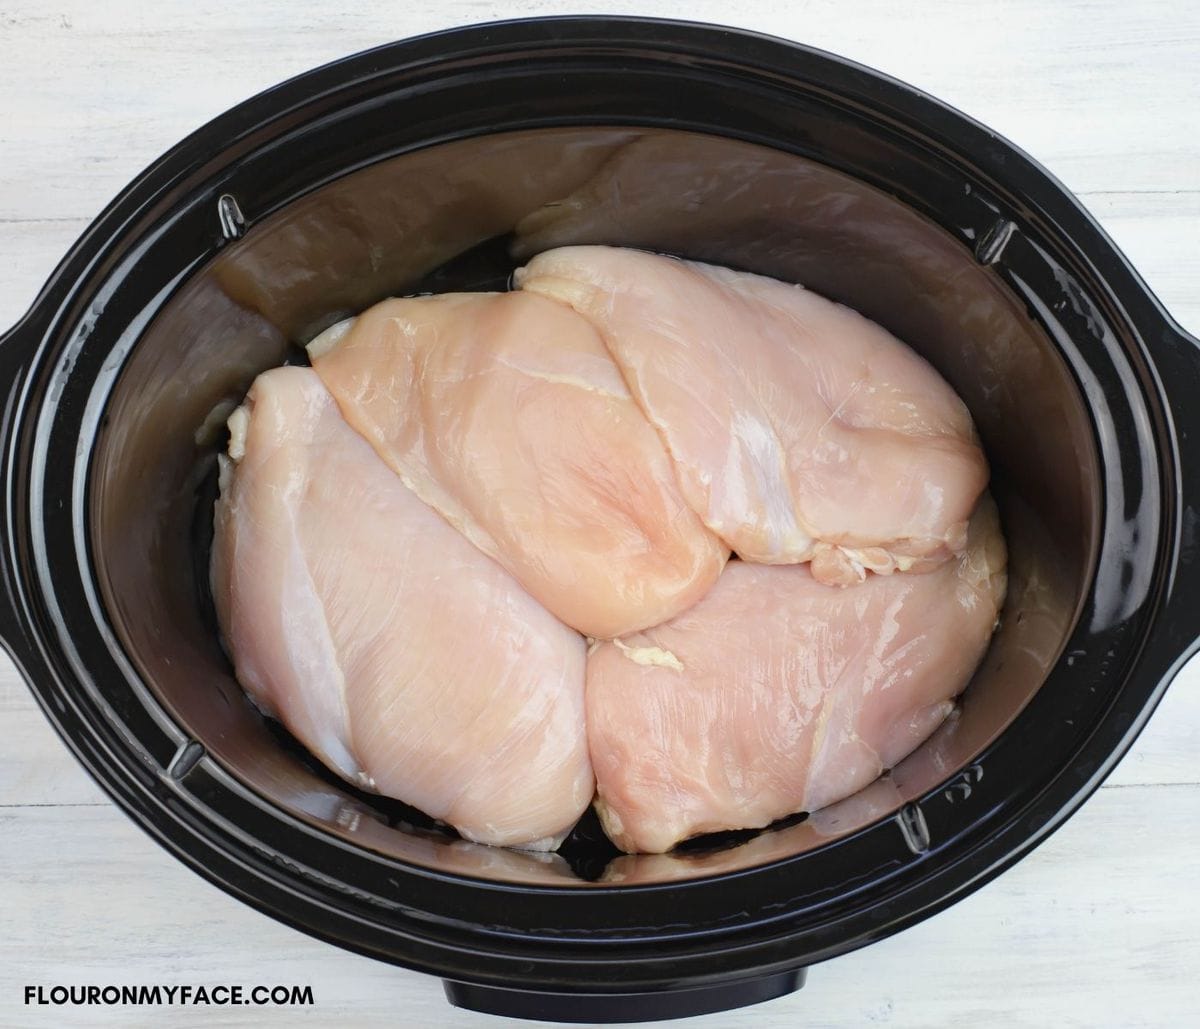 Overhead image of 4 boneless skinless chicken breasts in a crock pot.